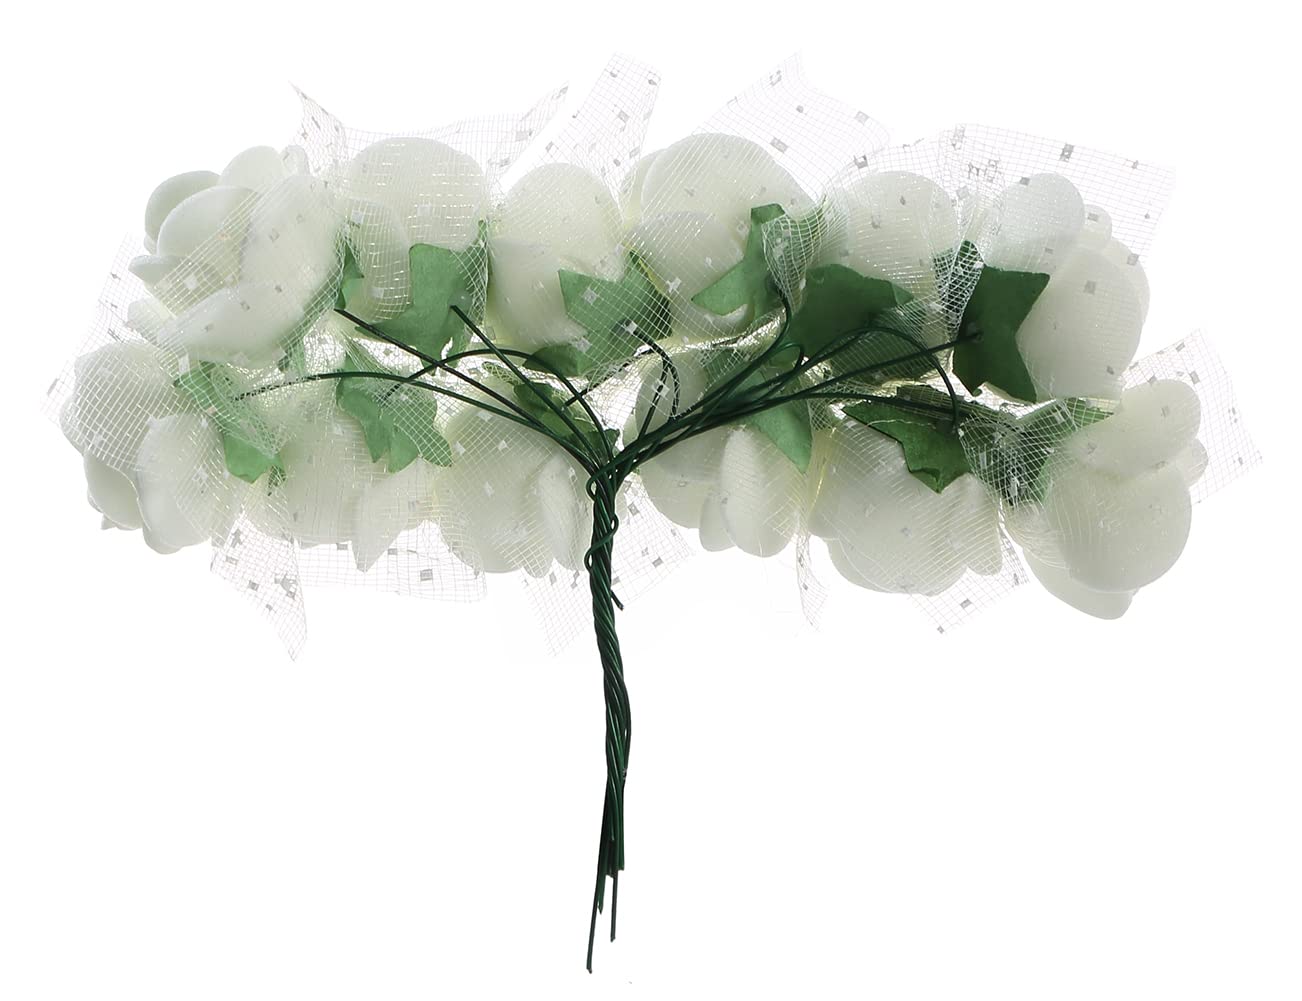 Gumolutin 144PCS Mini Fake Roses Artificial Foam Rose Heads with Wire Rods DIY Wedding Flowers Accessories Make Bridal Hair Clips Headbands Dress,Milk White